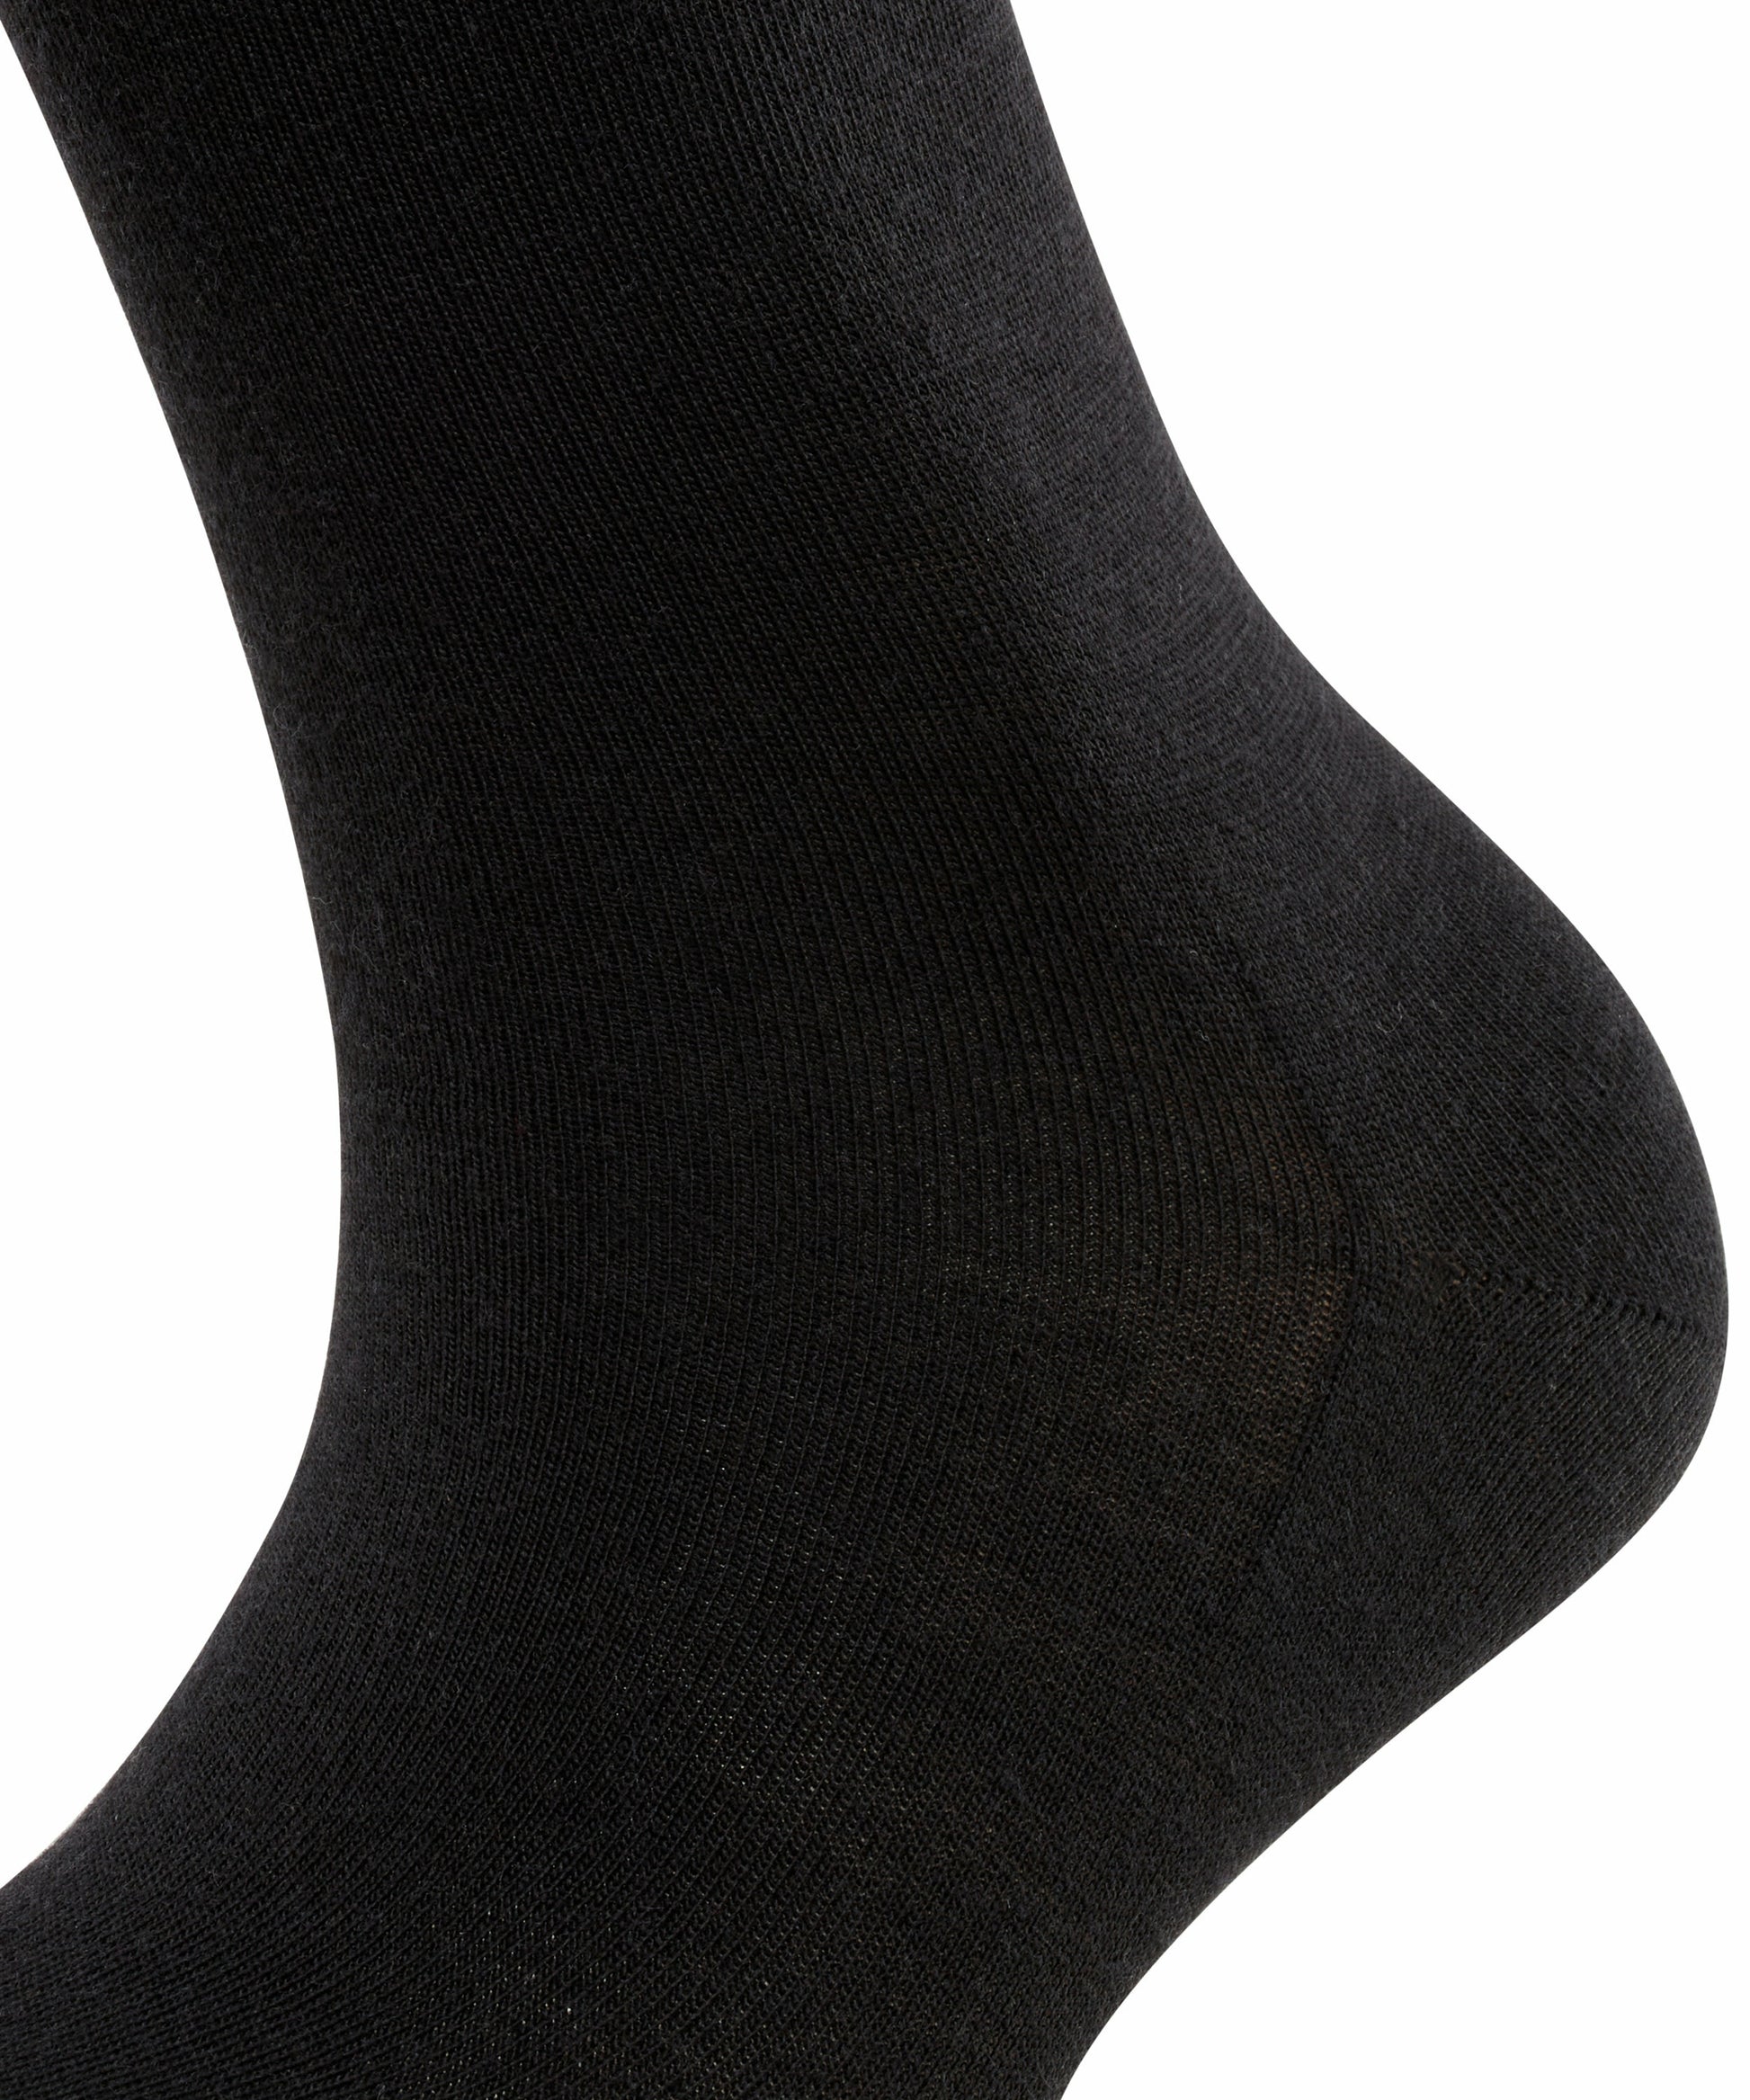 Socken Softmerino (Black)